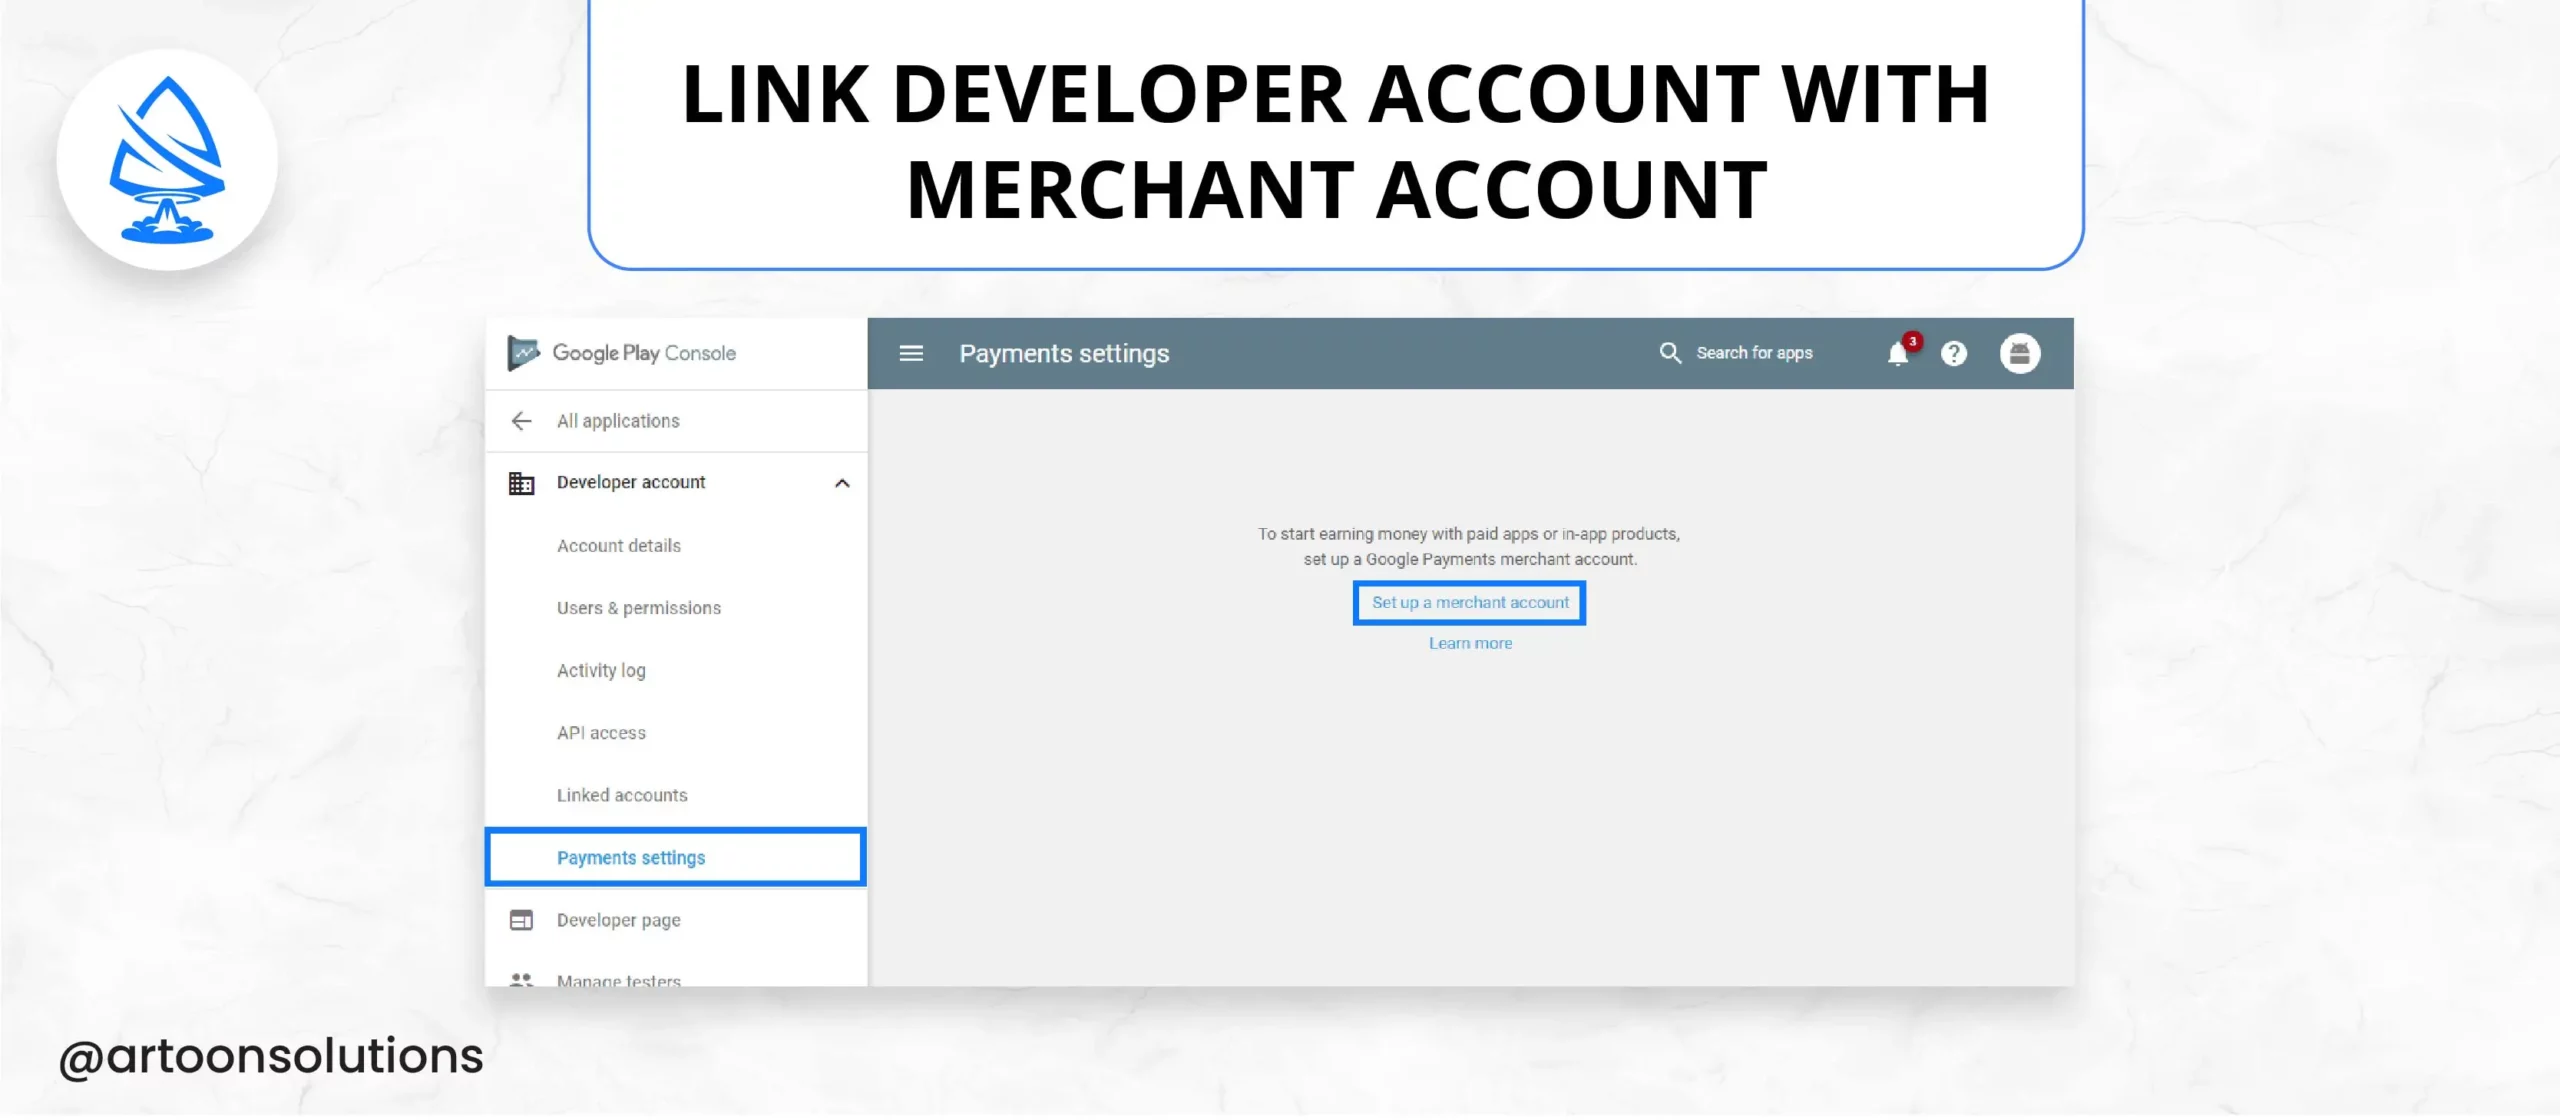 Link Developer Account with Merchant Account